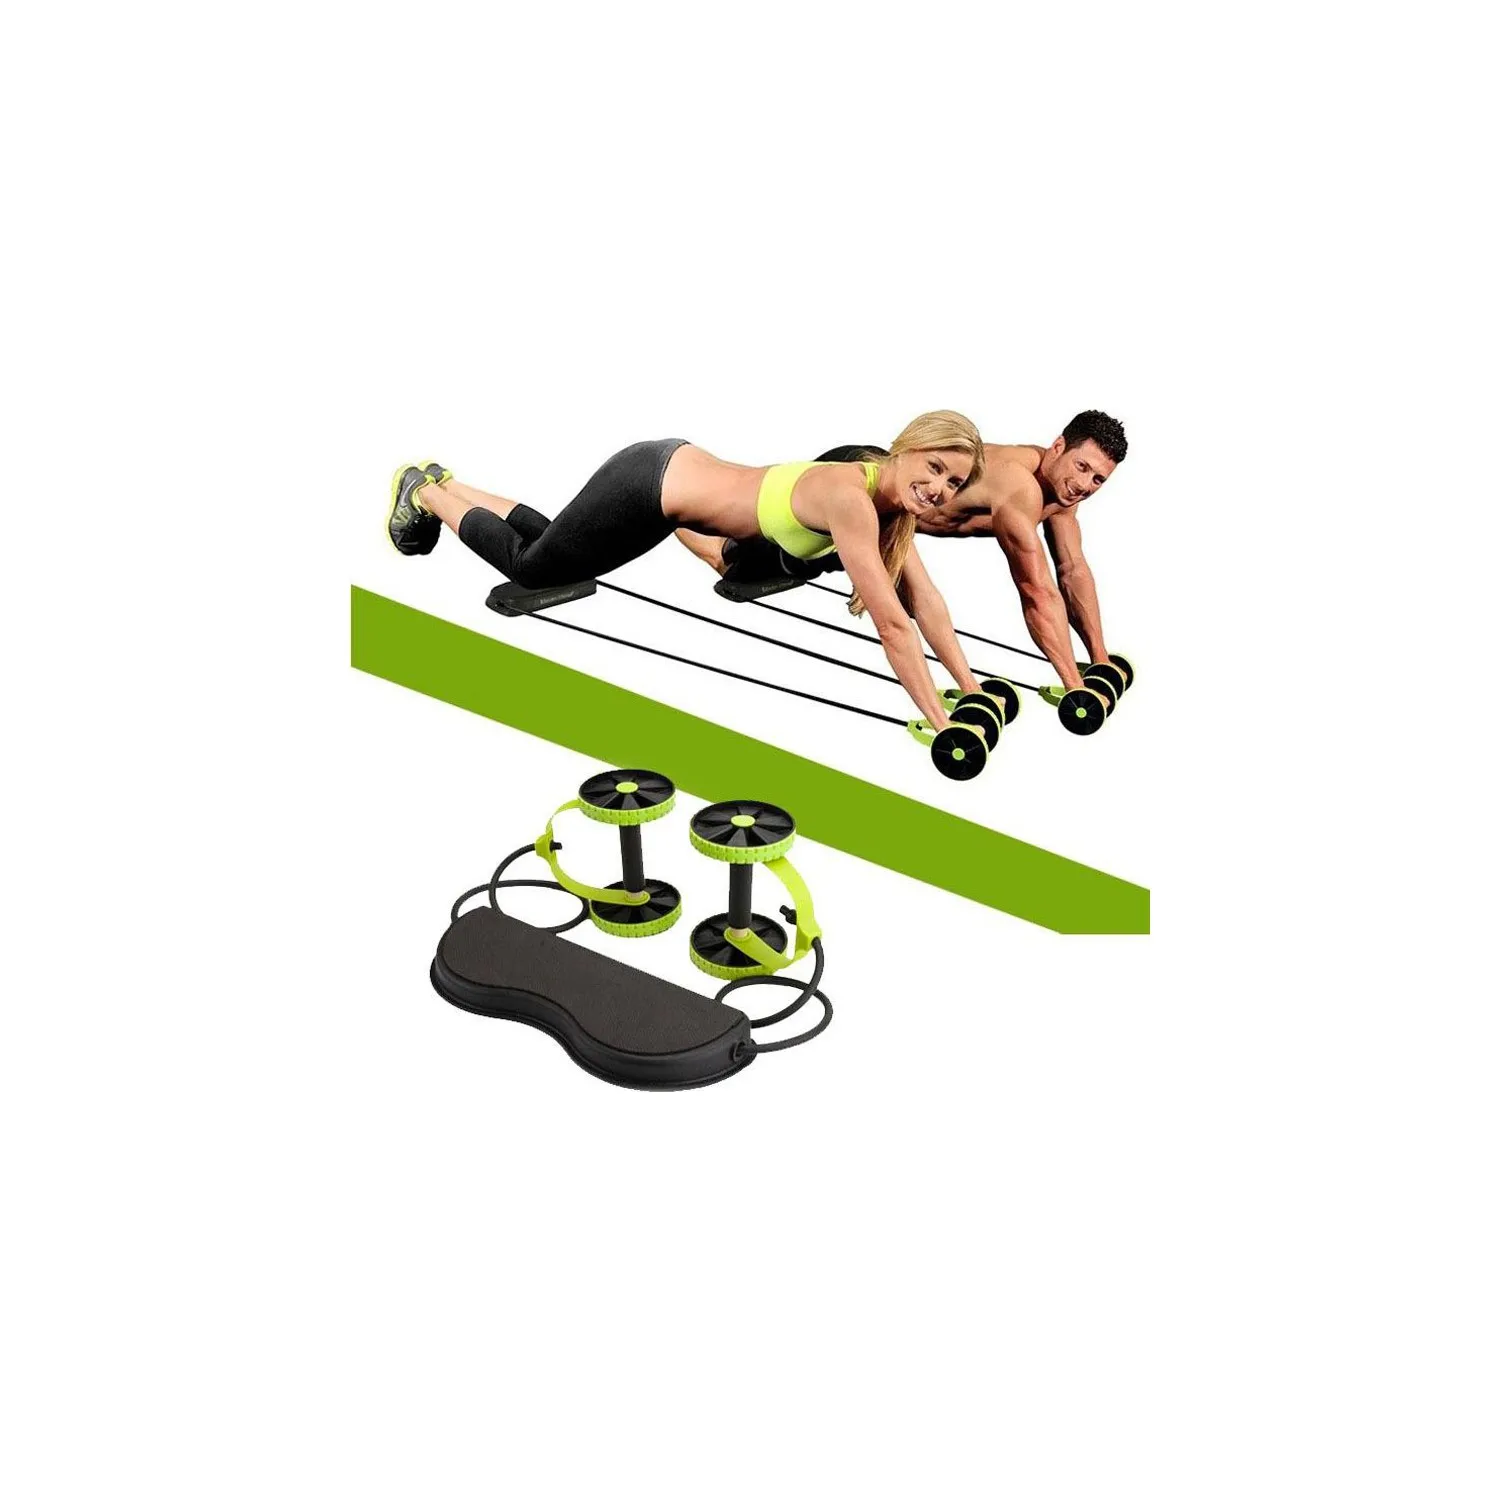 Lift analogie Twisted Multiflex Hamaha Revoflex Xtreme Workout Fitness Apparatuur Thuis Fitness  Yoga Platen Cardio|Outdoor fitnessapparatuur| - AliExpress